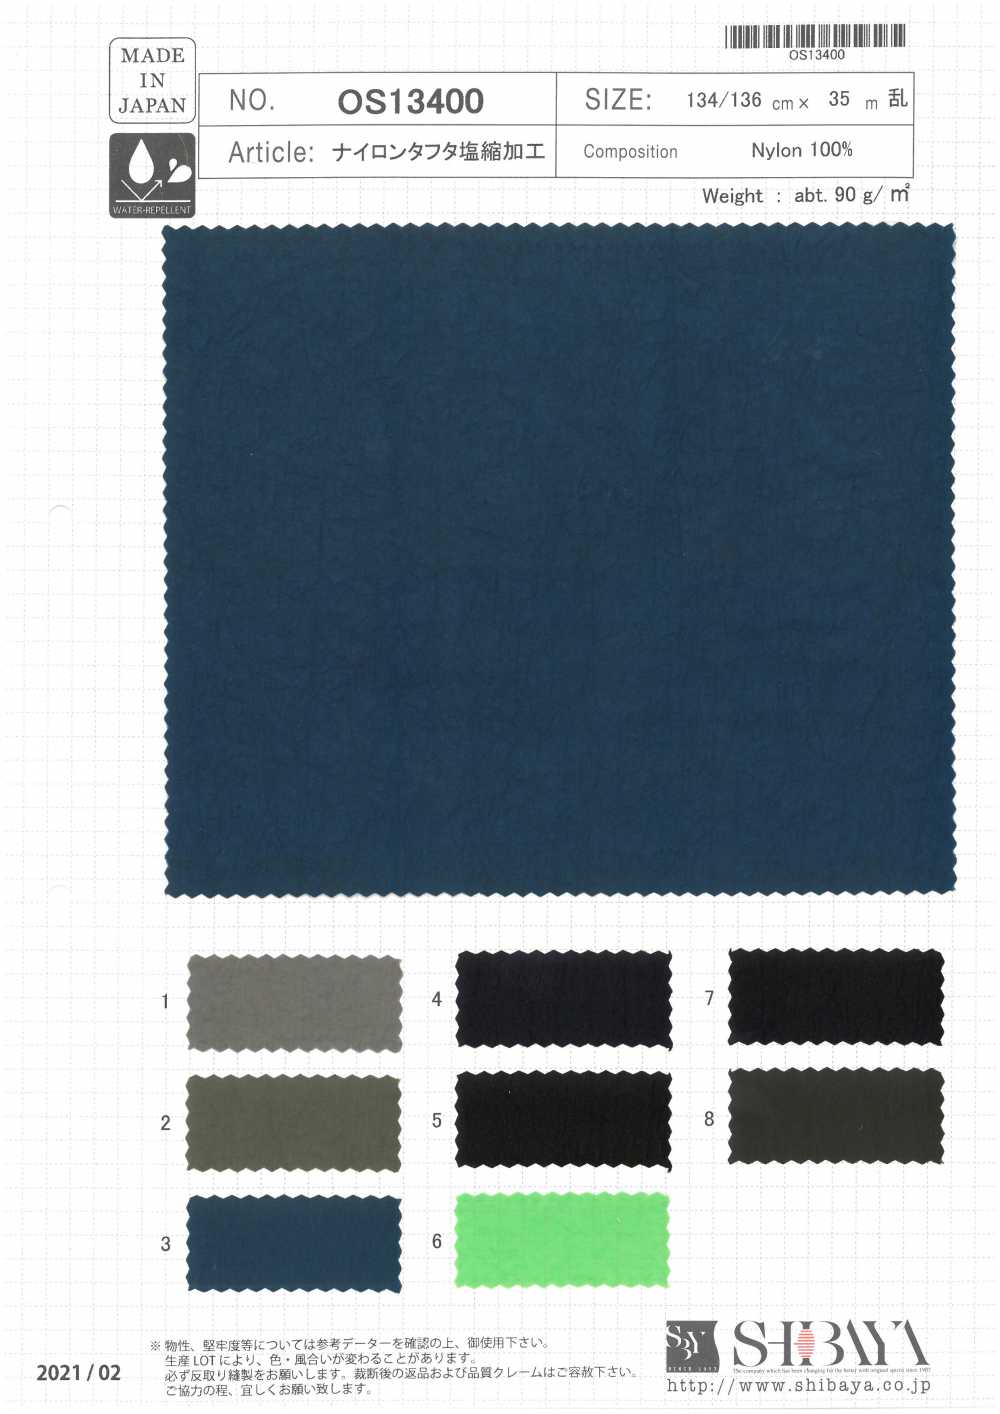 OS13400 Nylon Taffeta Salt Shrink Processing[Textile / Fabric] SHIBAYA